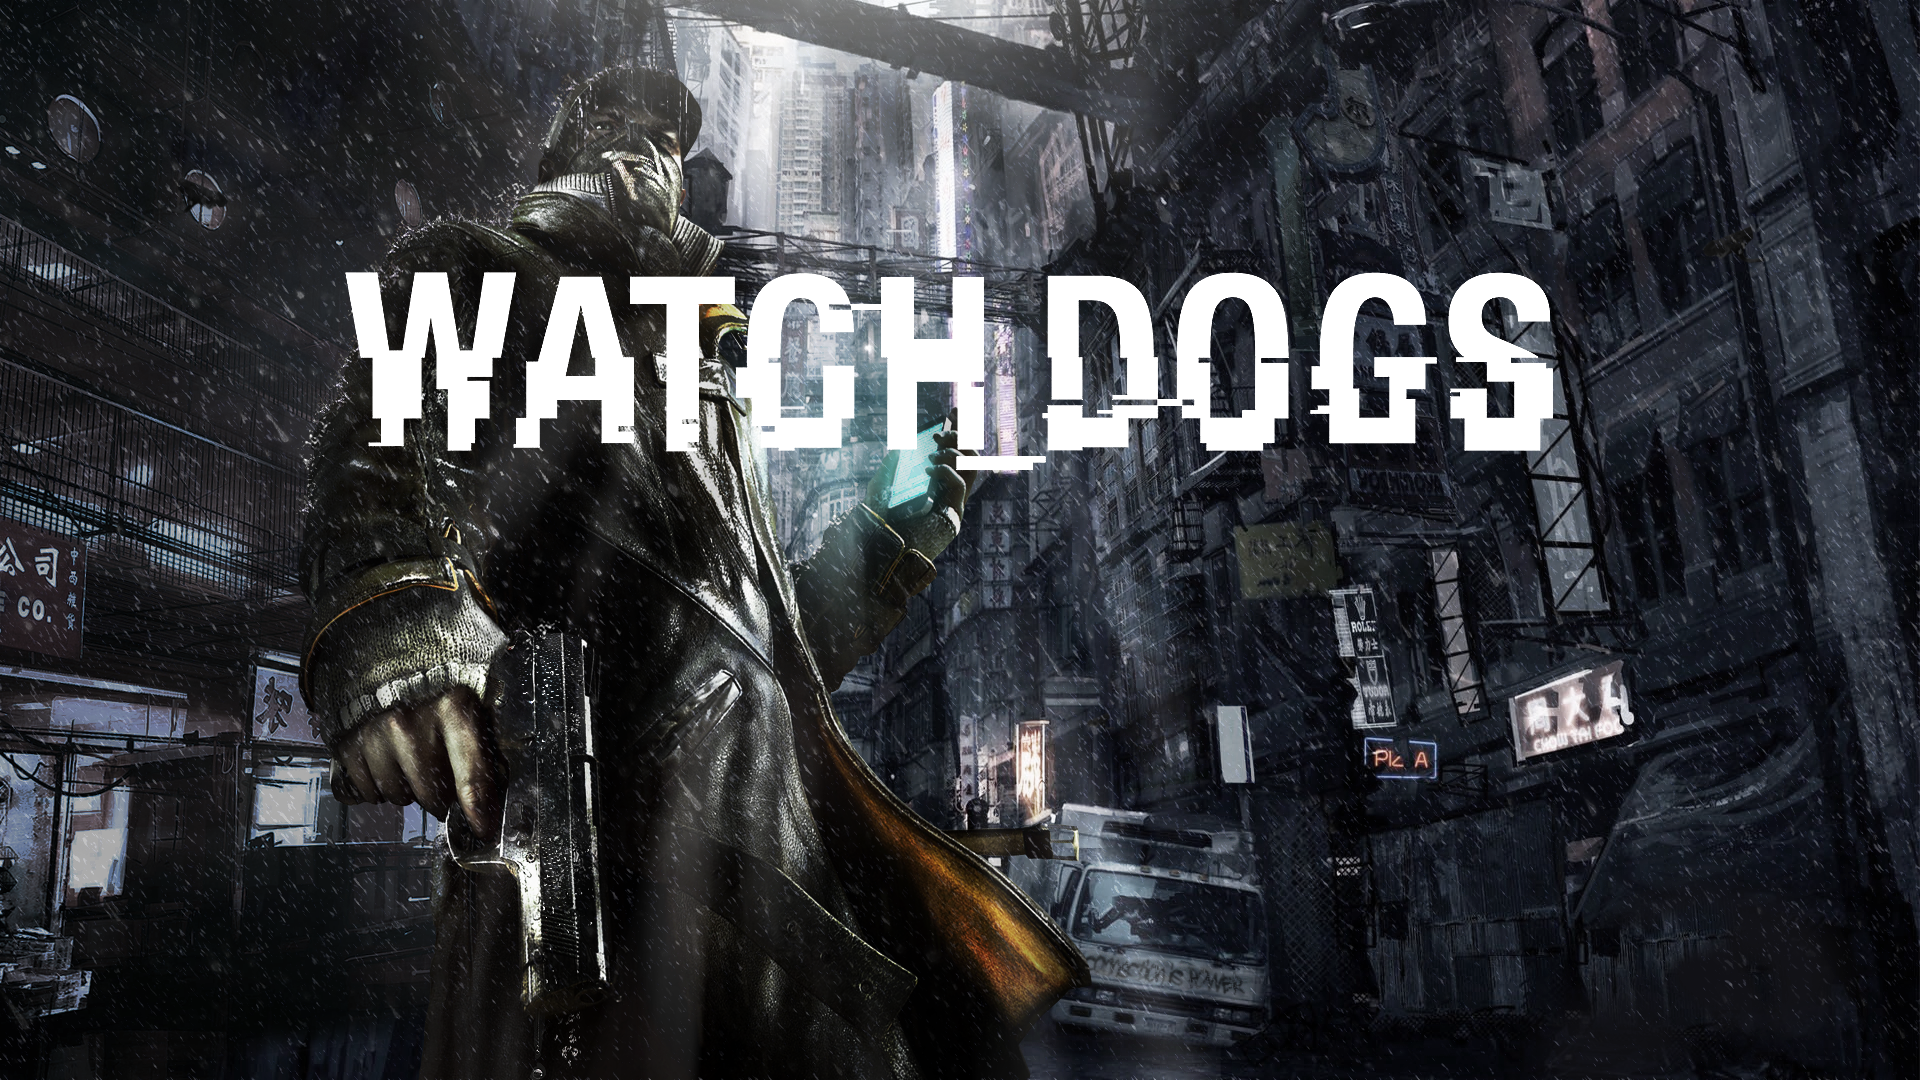 Watch Dogs Wallpaper Loud Title version by SpectreSinistre on